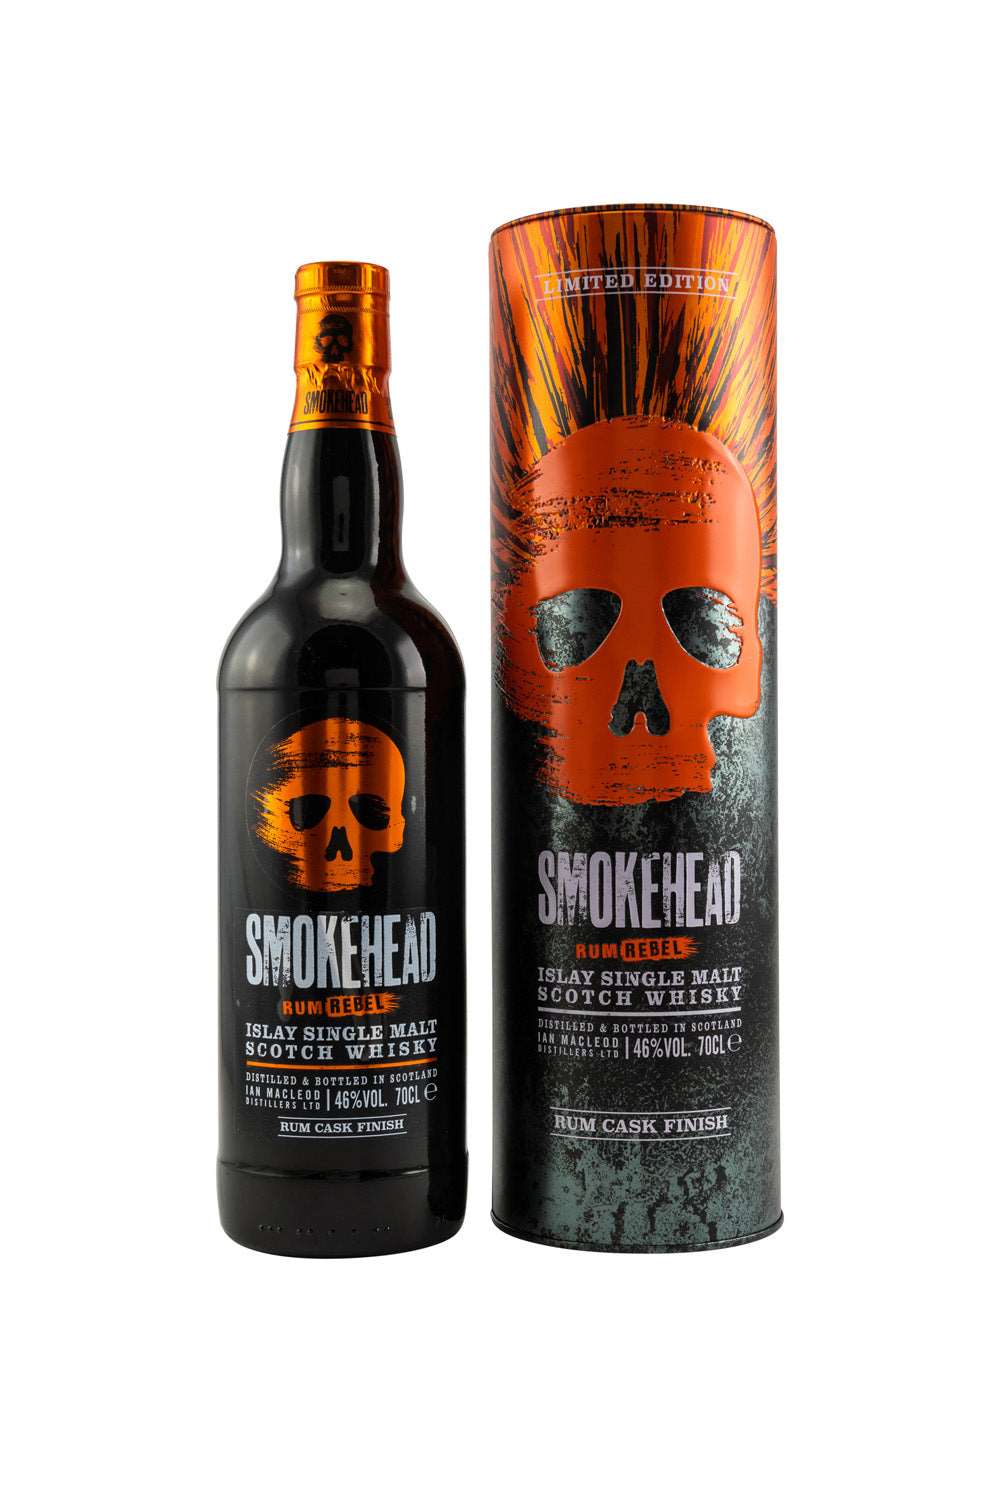 Smokehead Rum Rebel 2021 Islay Single Malt Scotch Whisky 46% vol. 700ml - Maltimore